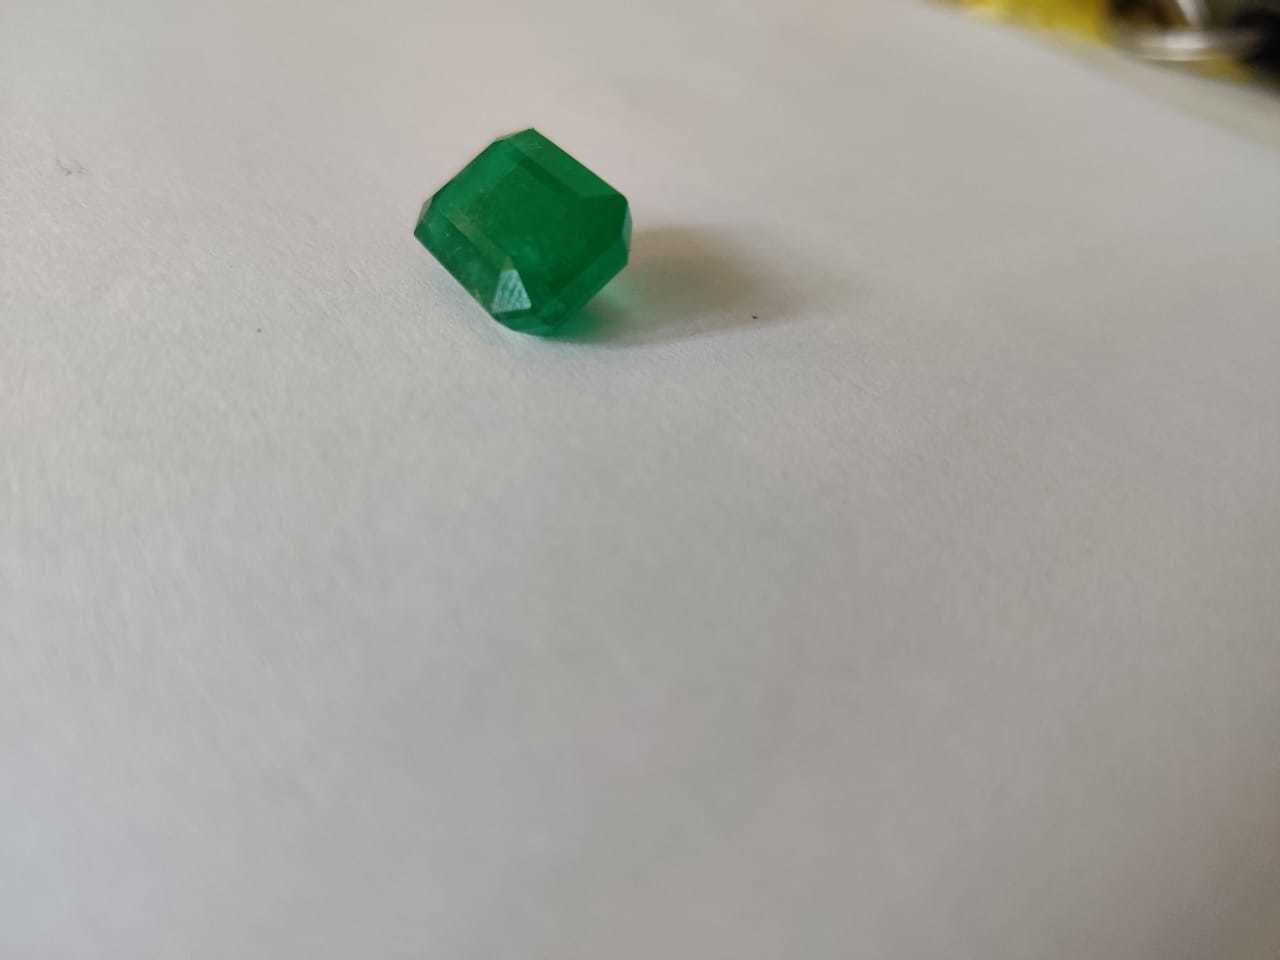 Green Medium Luster Stone